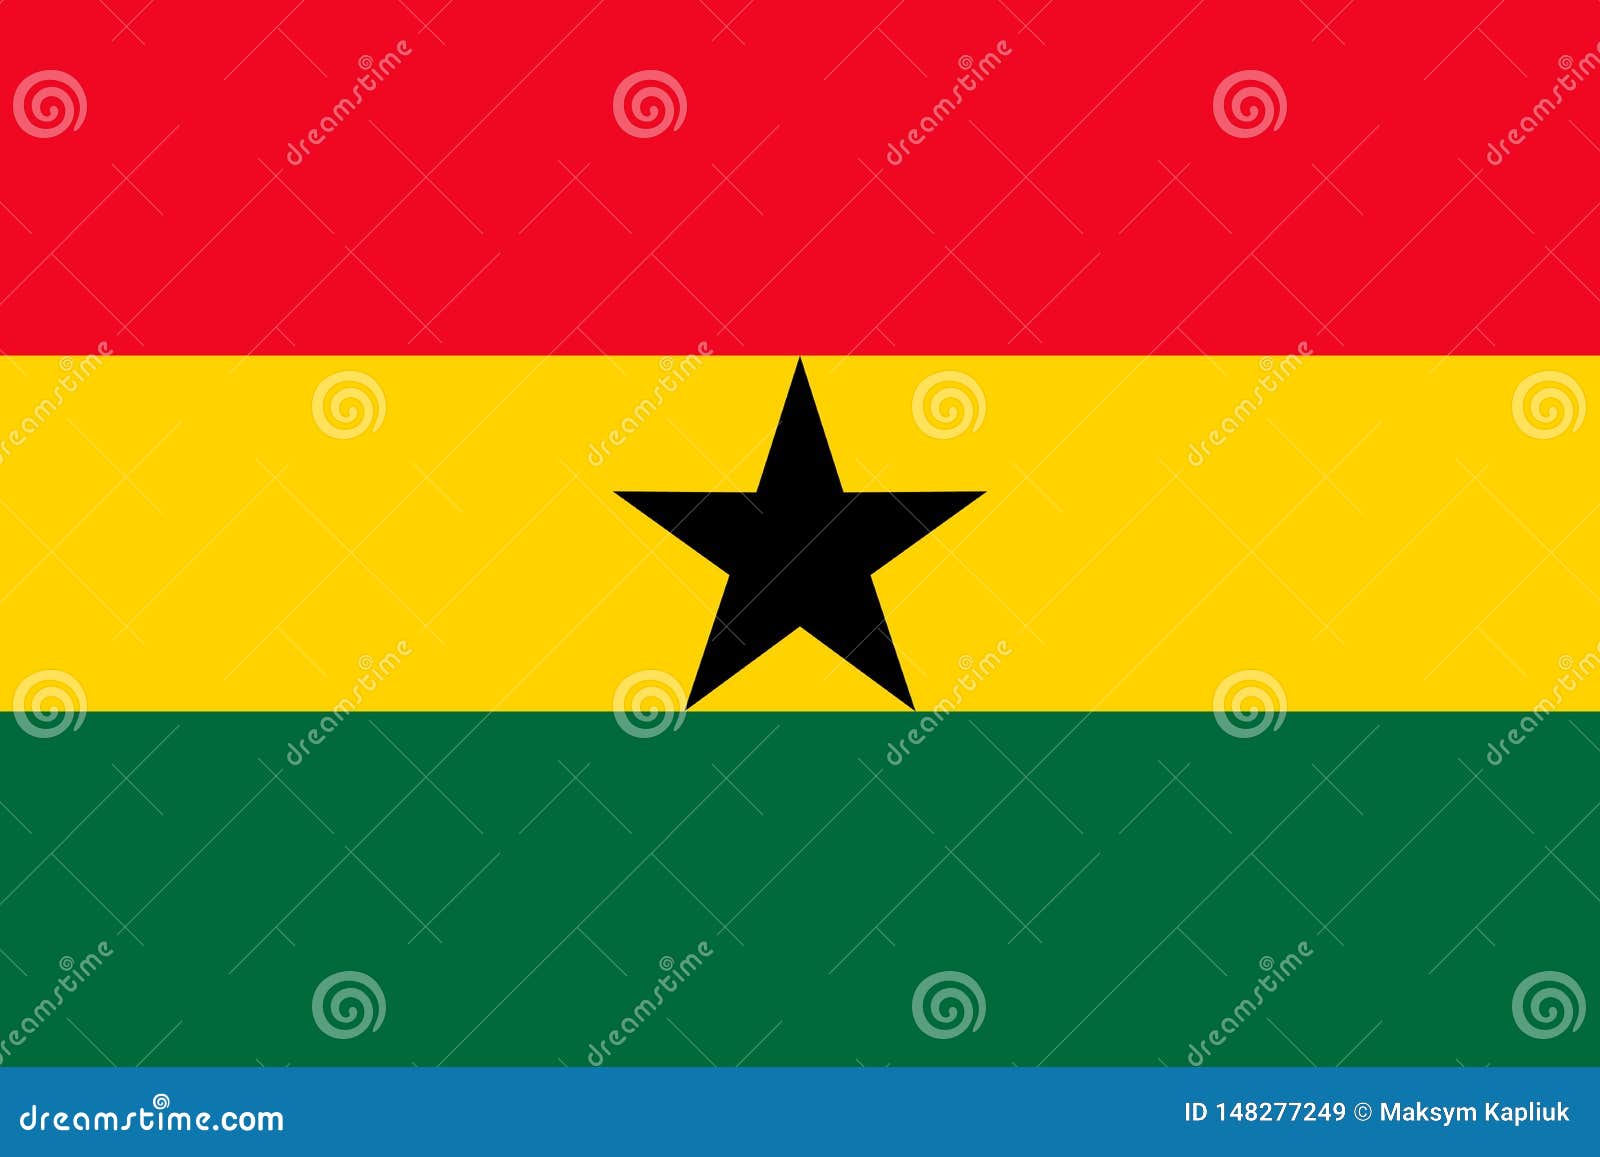 Ghana National Flag Vector Illustration Accra Stock Vector